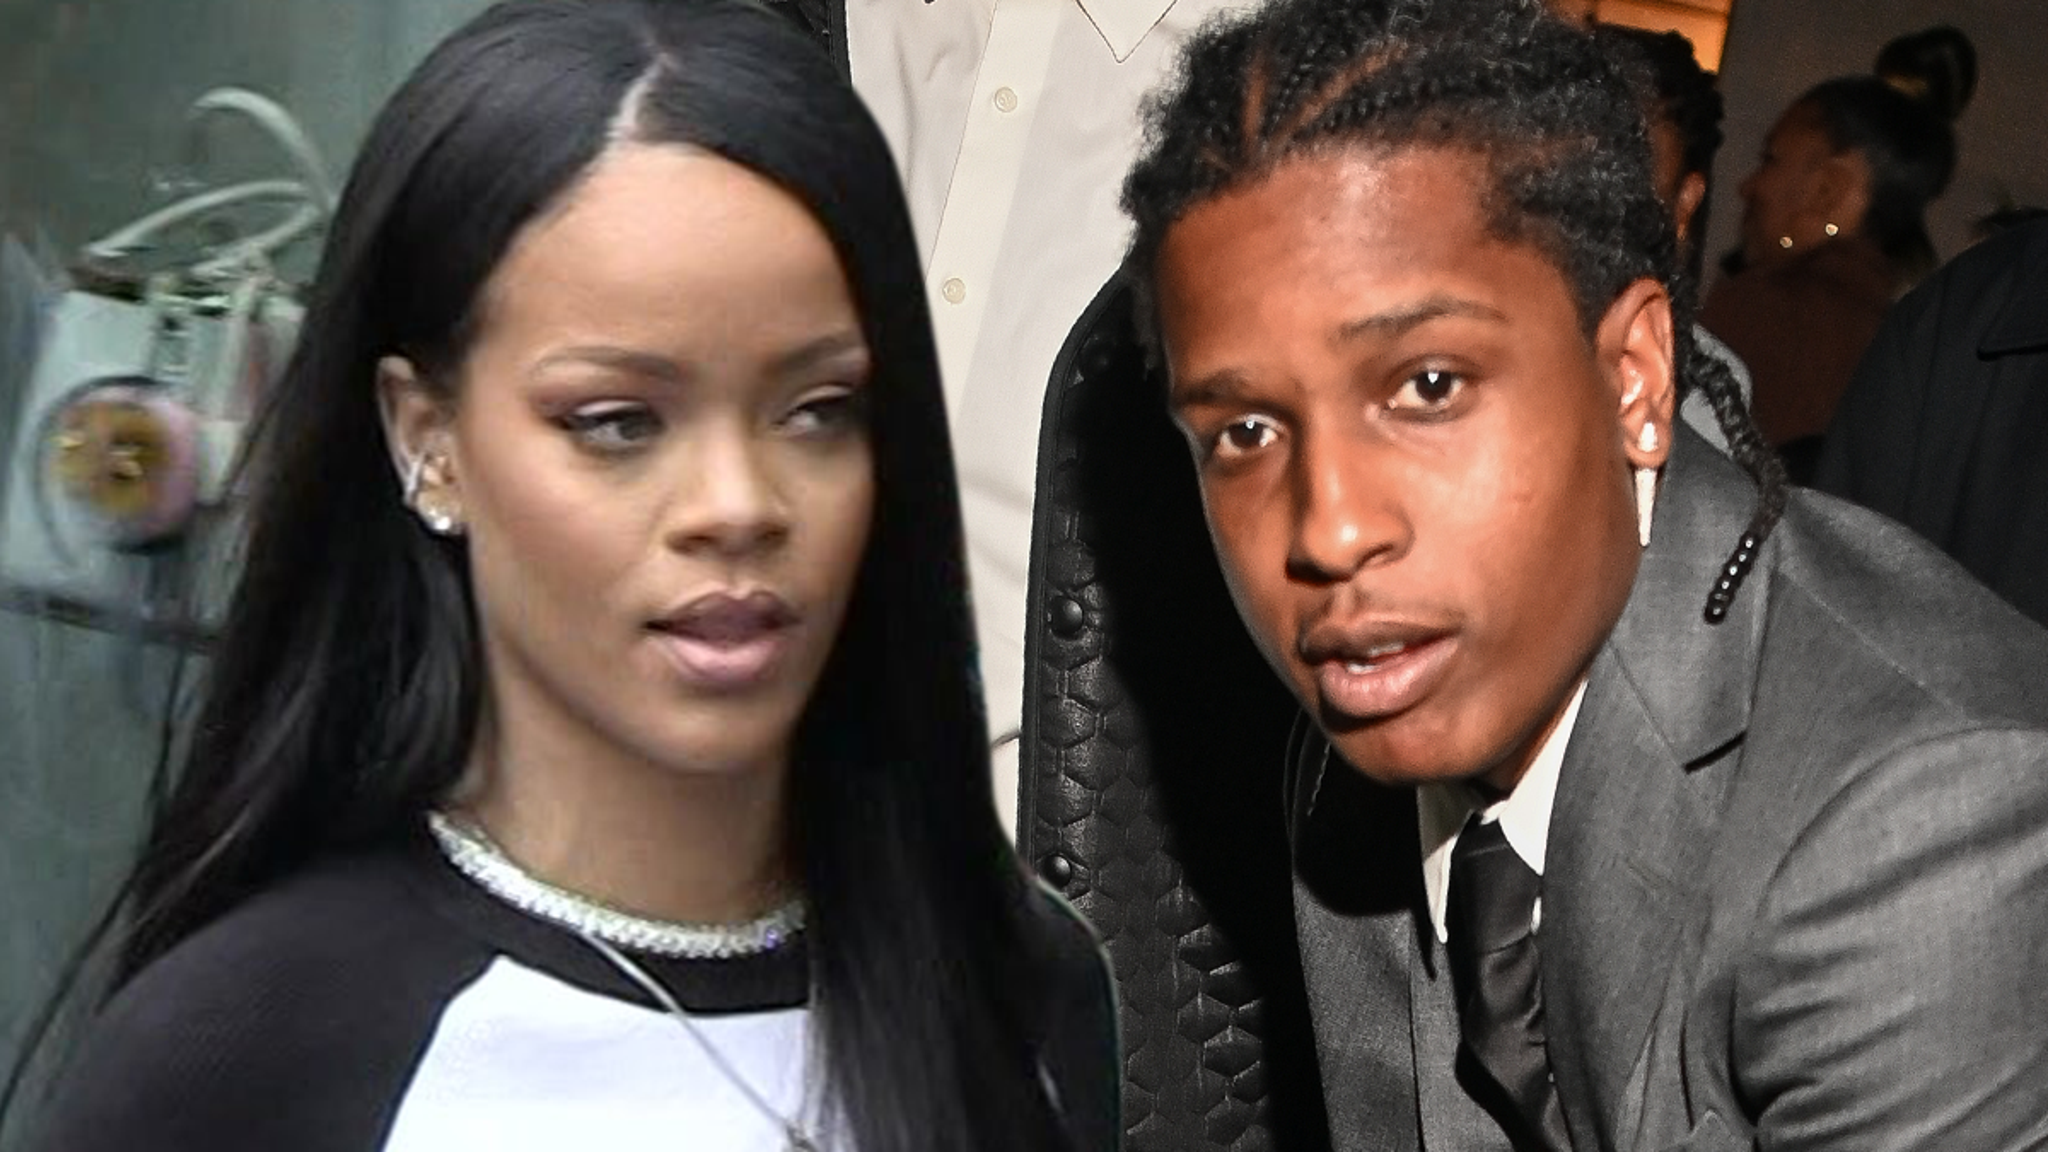 Rihanna, A$AP Rocky Cheating and Breakup Rumors Untrue, Source